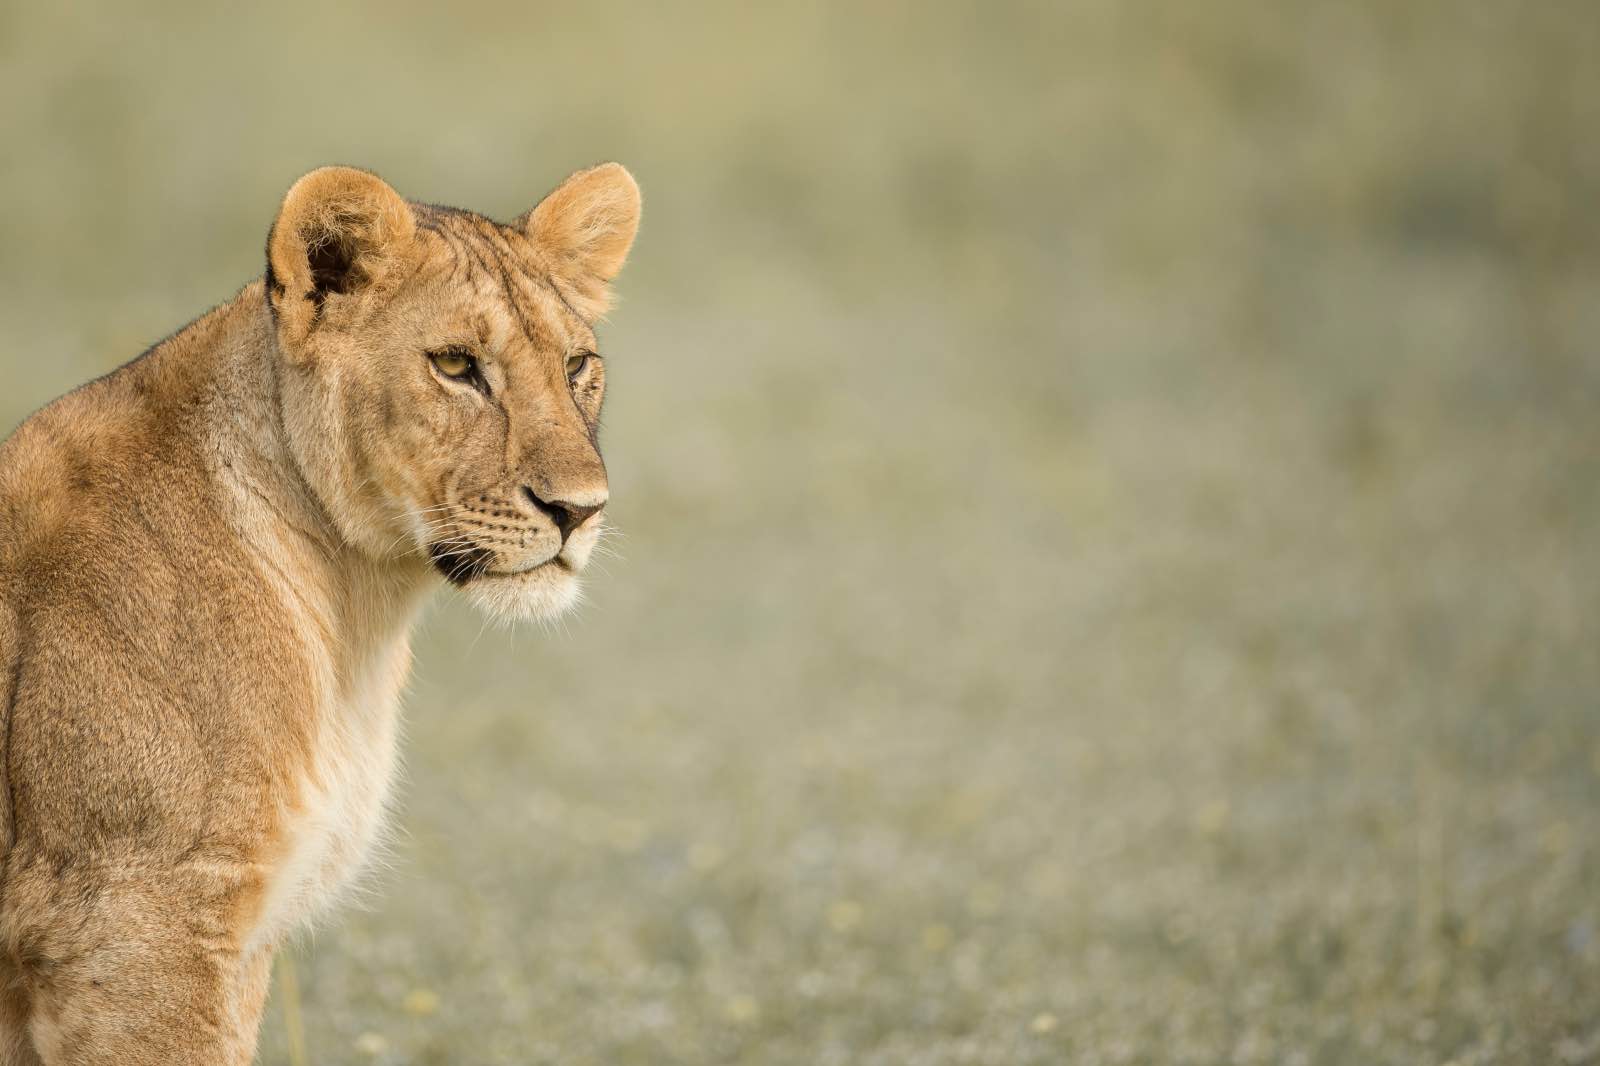 A lioness in Grumeti Reserve, part of the Serengeti-Mara ecosystem